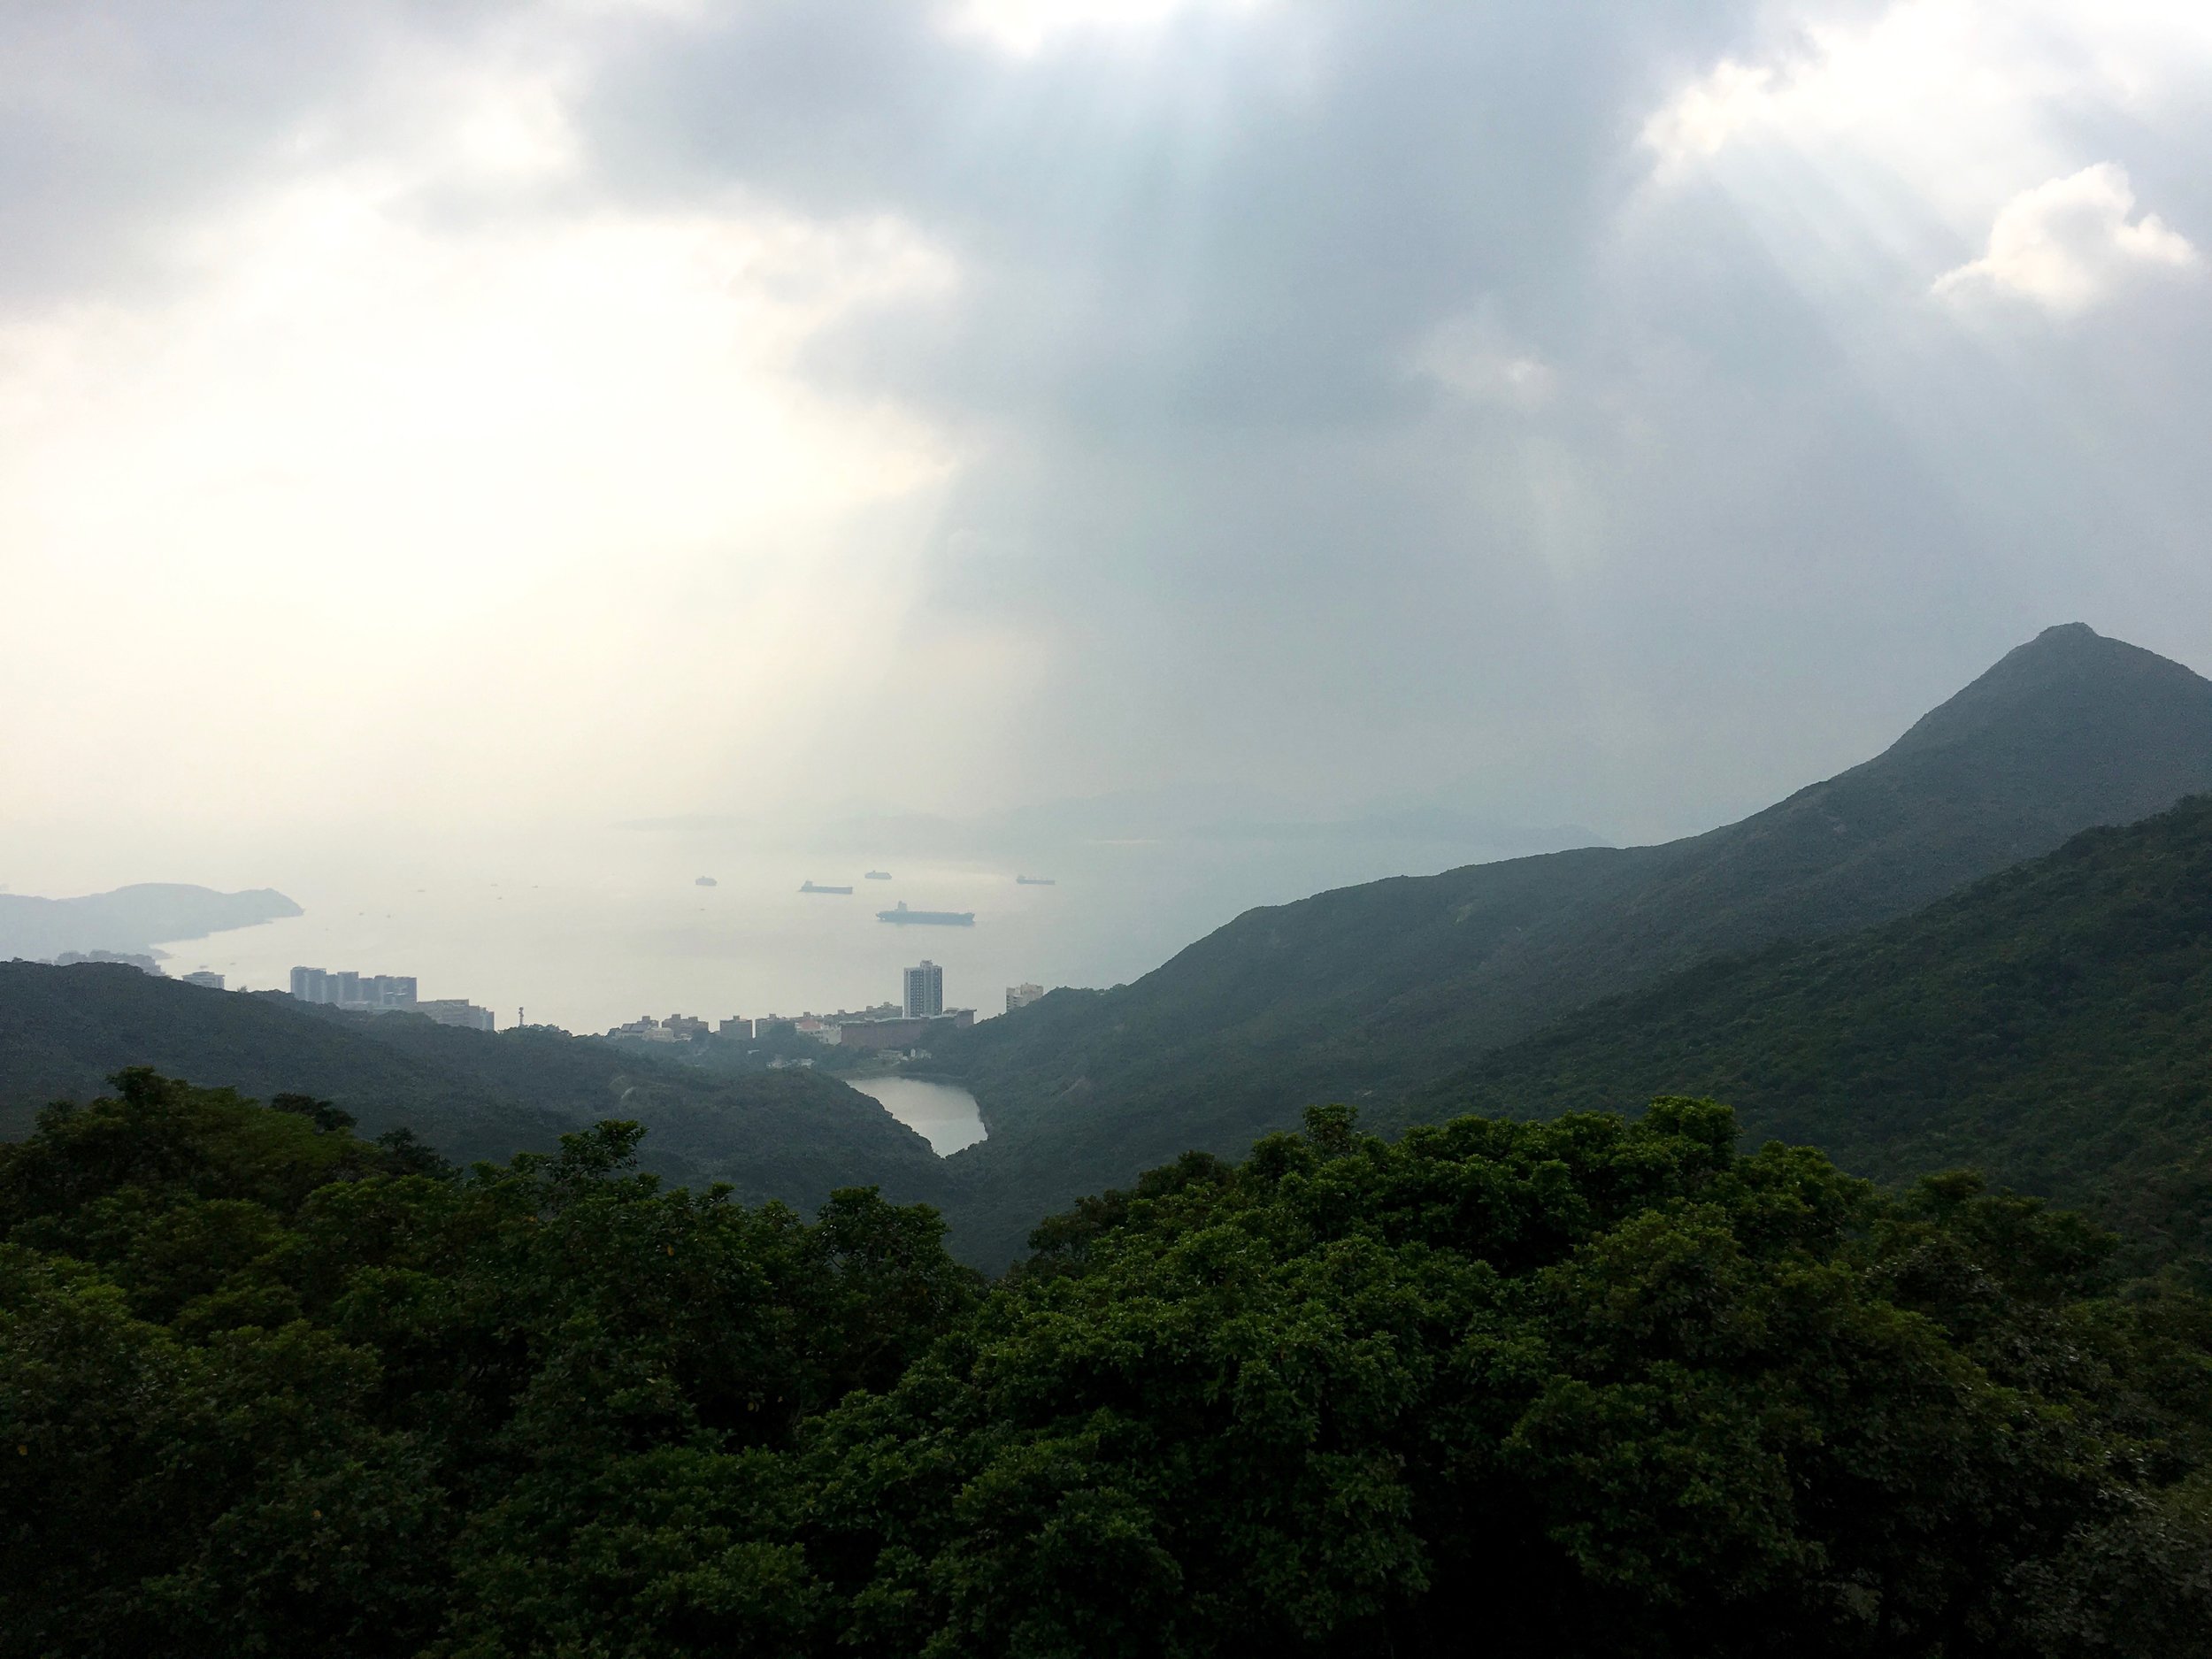 Victoria Peak-Hong Kong-Mountain view.jpg